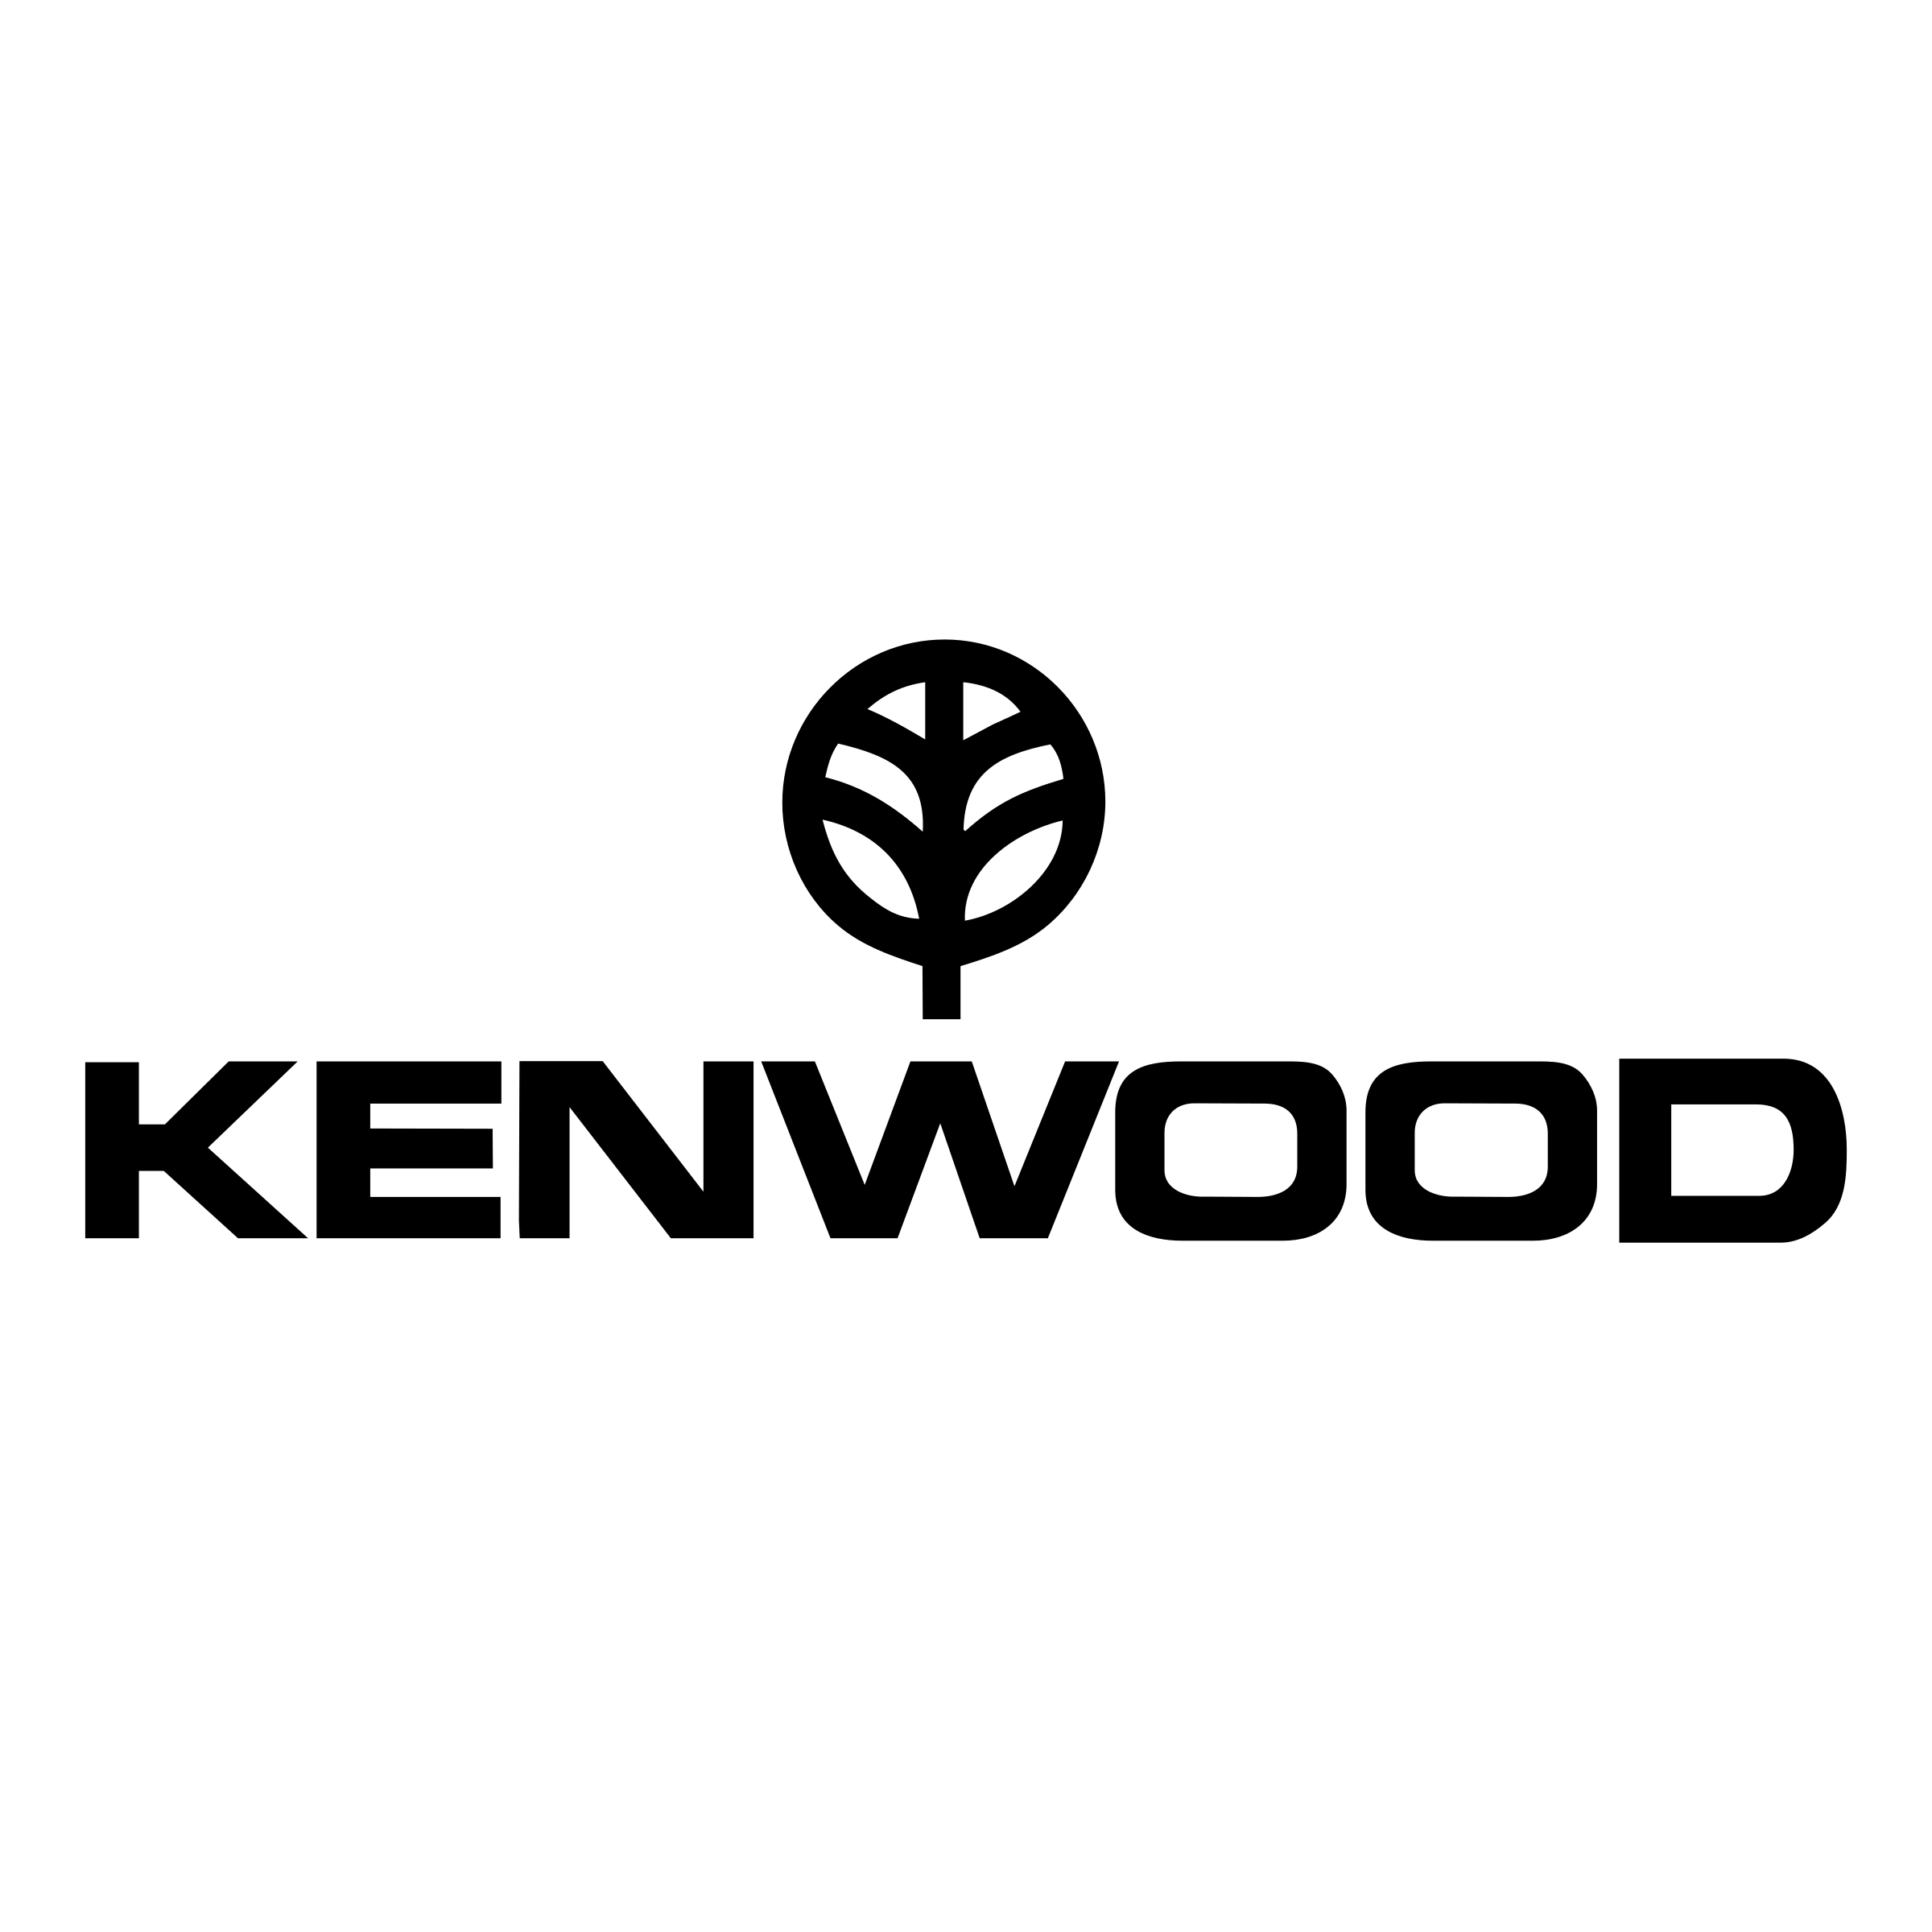 Kenwood Logo - Kenwood Logo PNG Transparent & SVG Vector - Freebie Supply